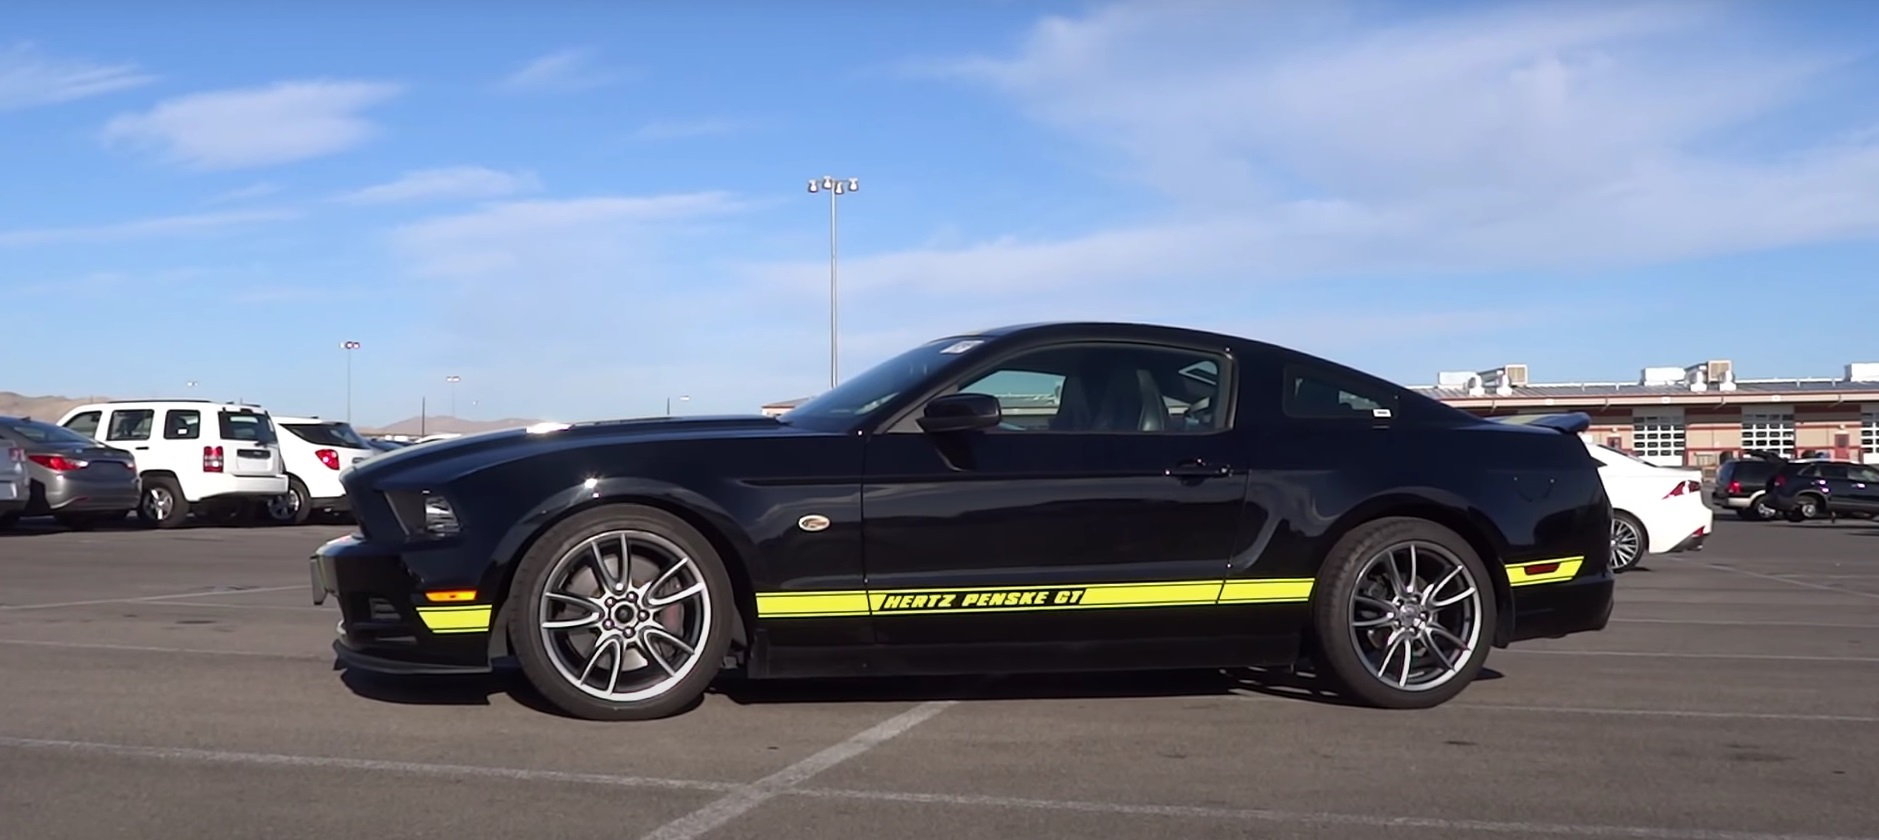 Video: 2014 Ford Mustang Hertz Penske GT Walkaround